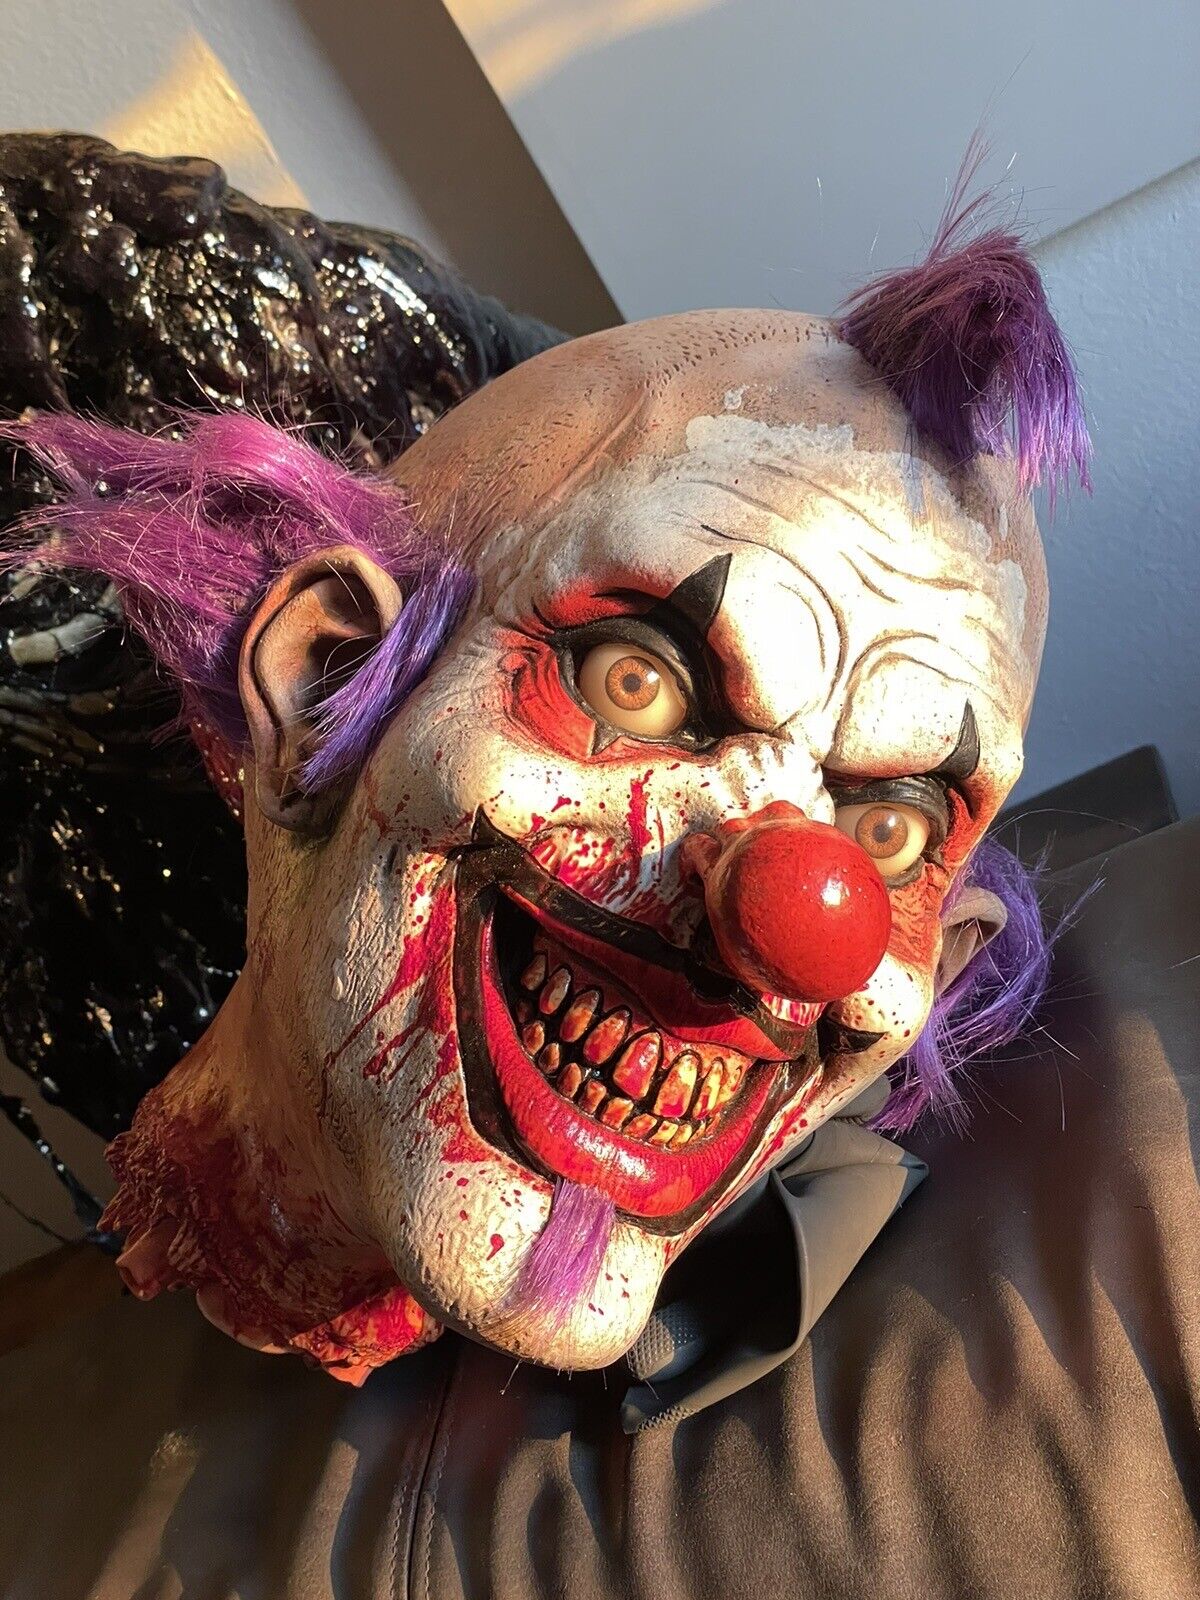 severed head halloween prop clown by FX pro Studio LIFESIZE 1:1